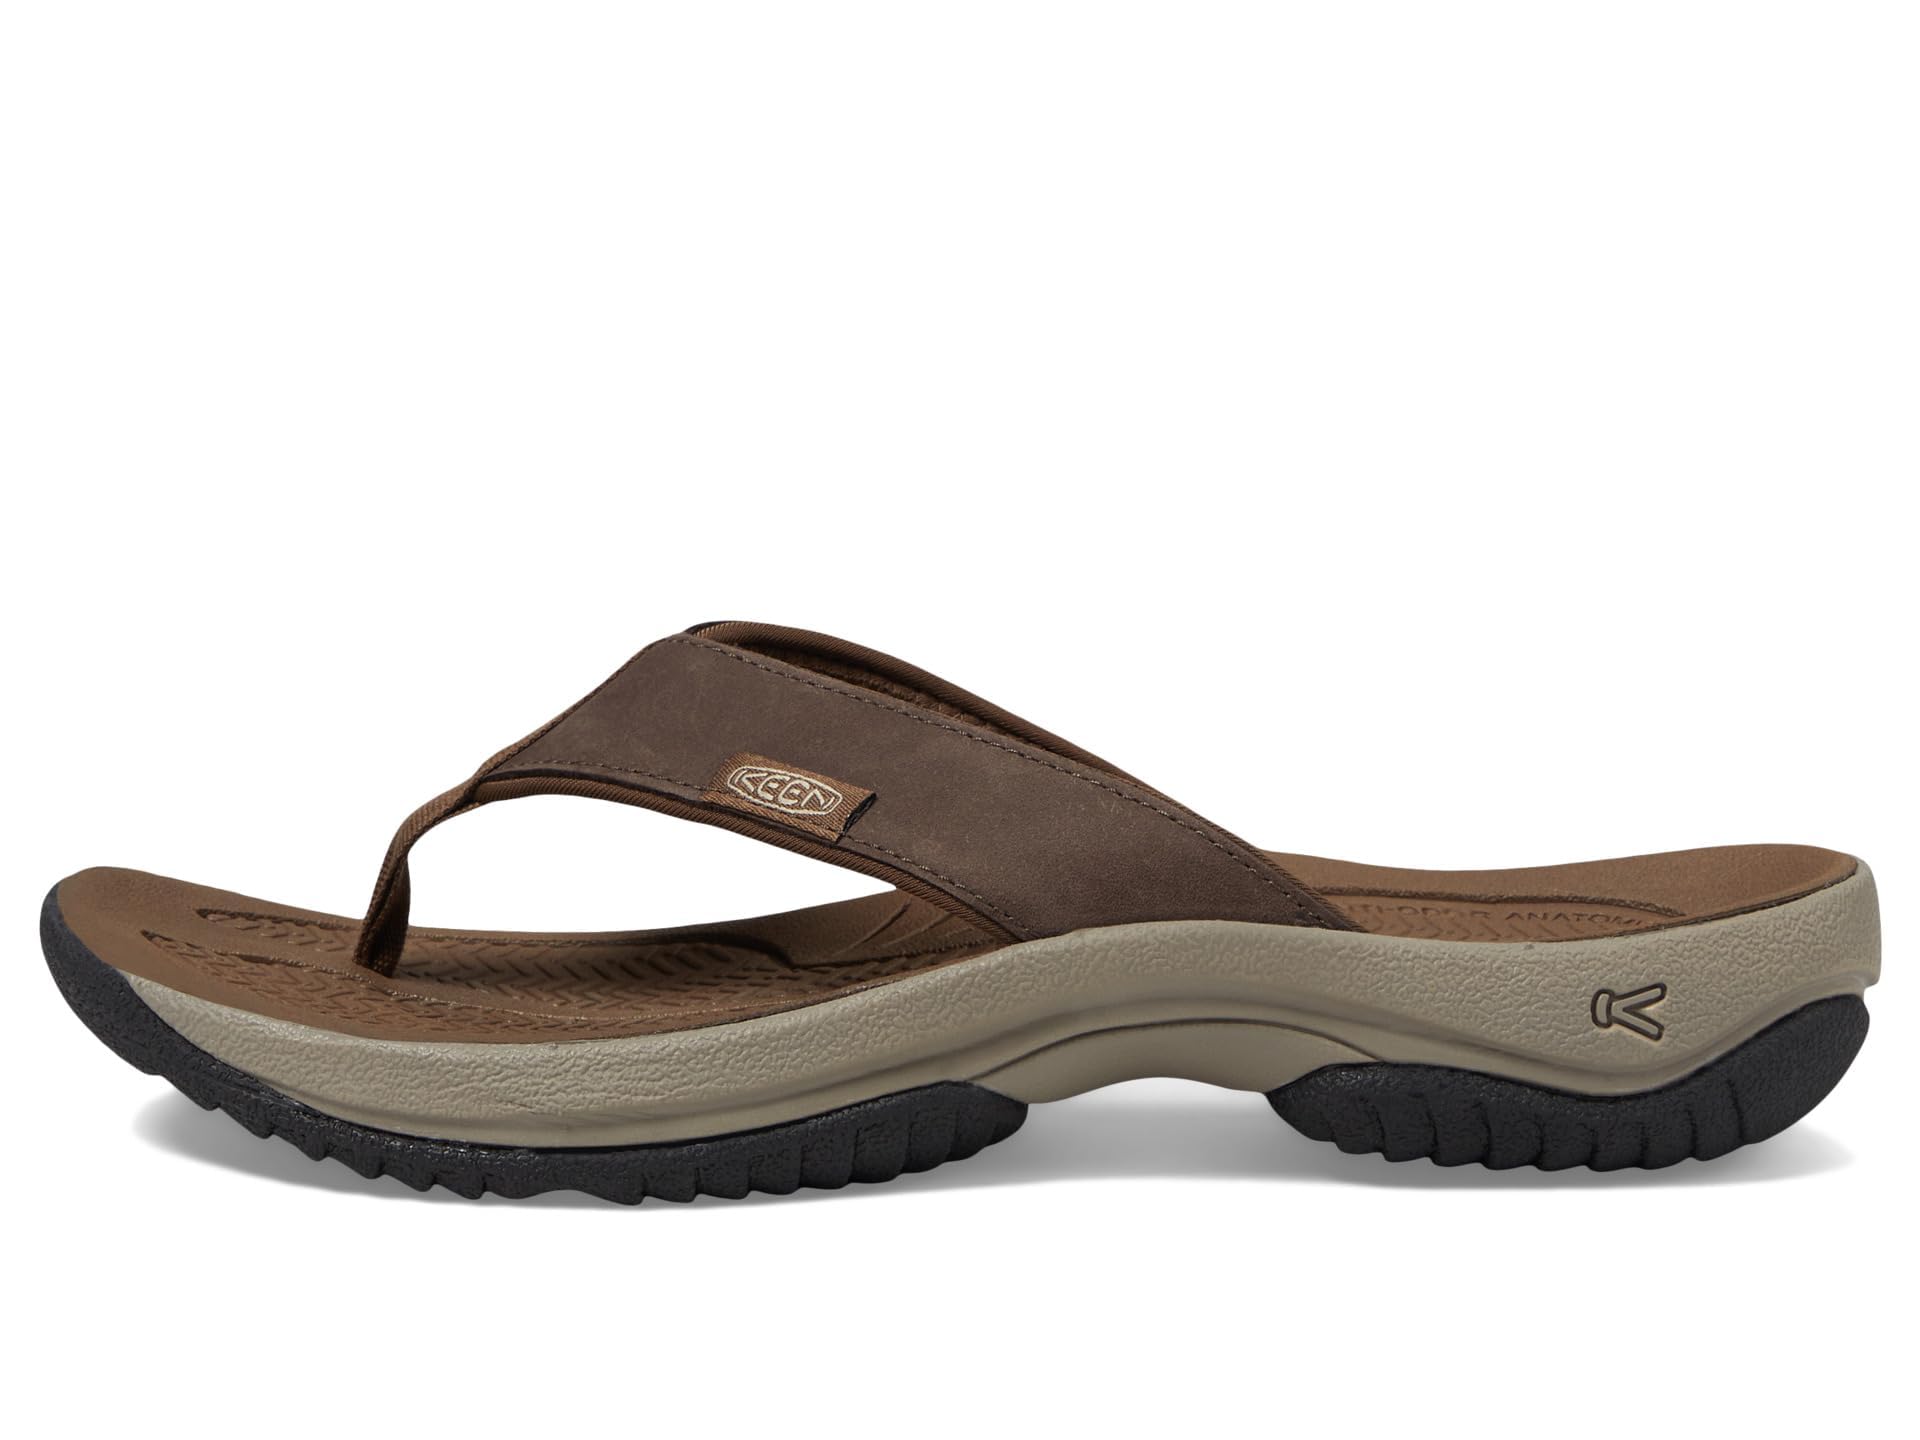 KEEN Men's Kona Flip Flop Beach Sandals, Java/Dark Earth, 10